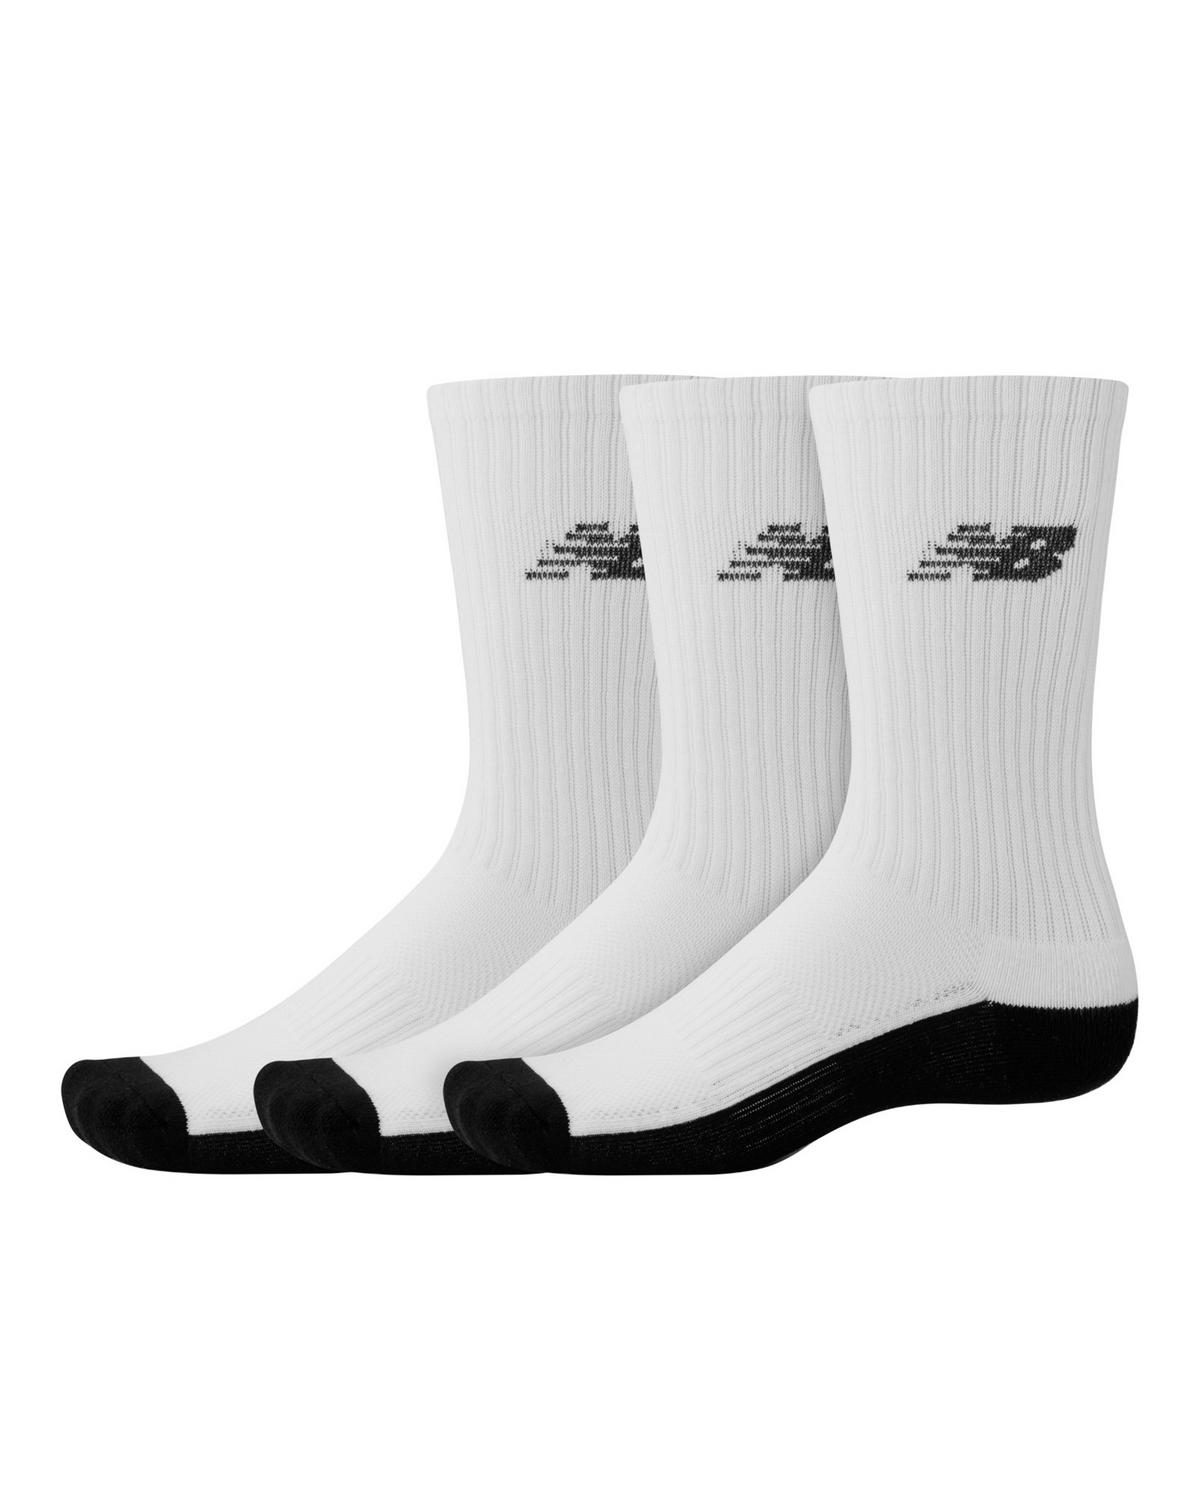 New Balance Crew Cushioned Socks - 3 Pack -  White